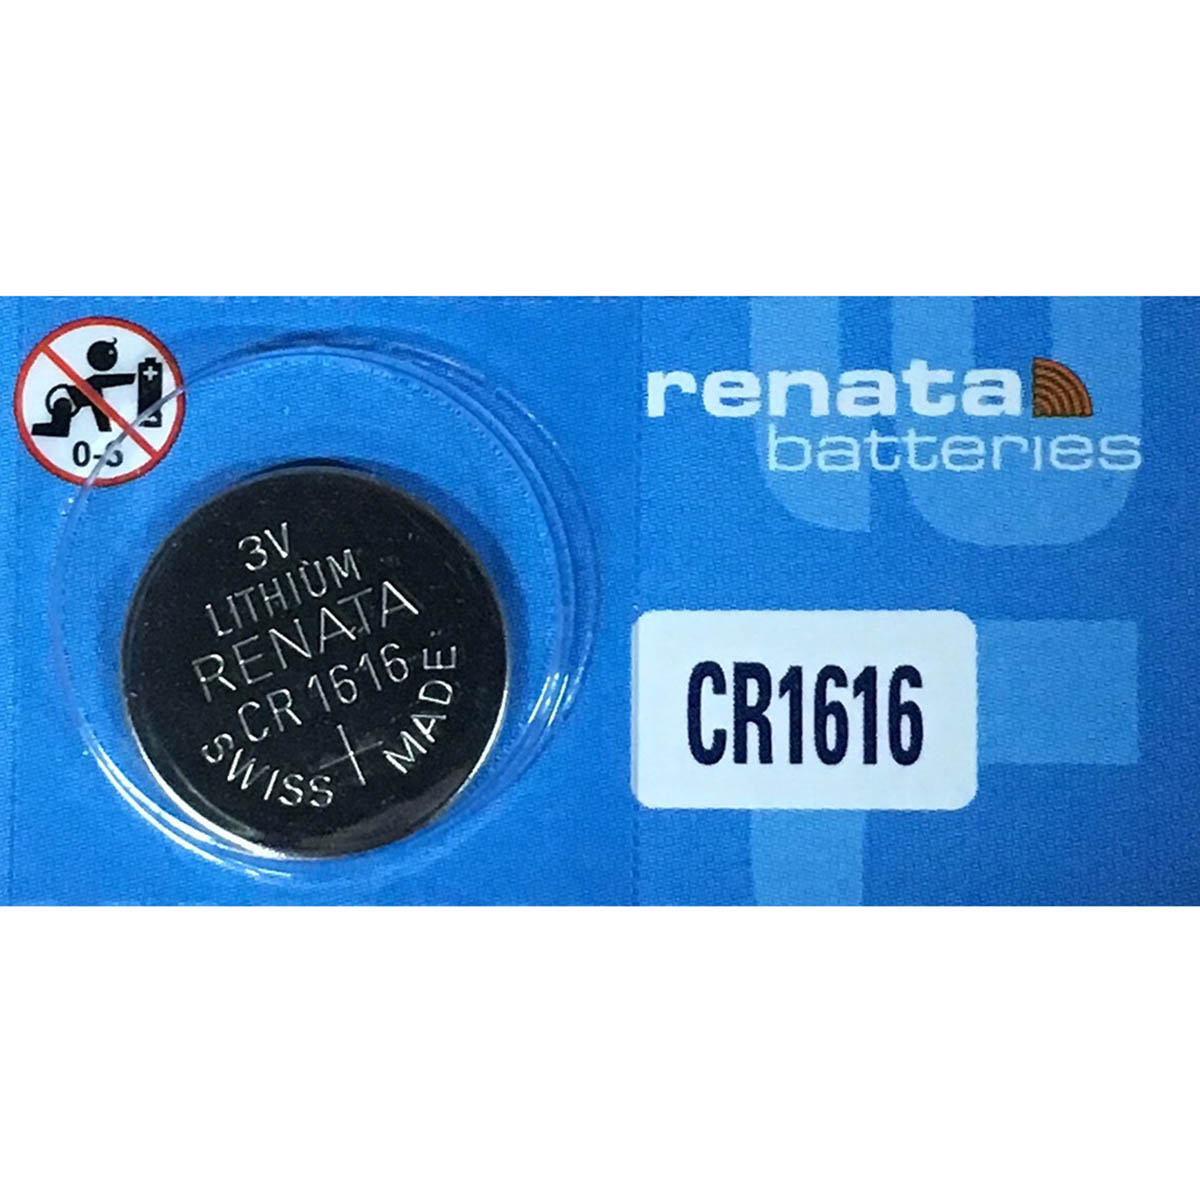 Renata CR1616 Battery 3V Lithium Coin Cell (1 pc.)